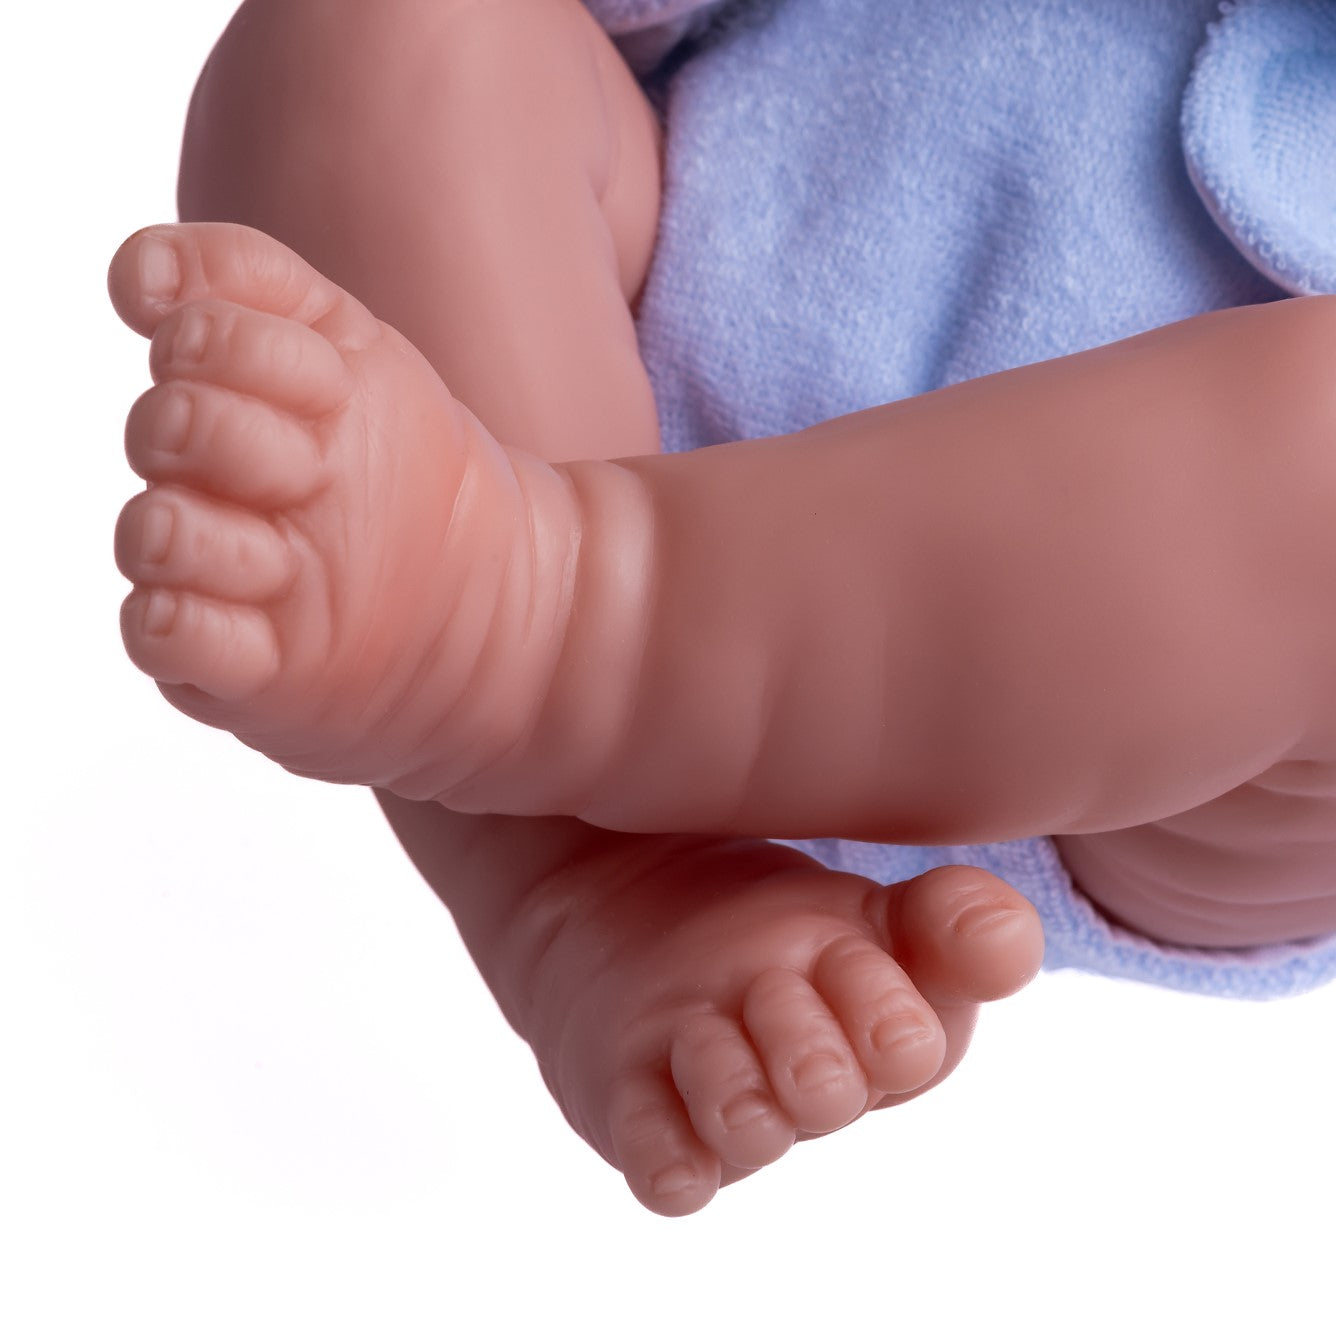 JC Toys, La Newborn Nursery 8 Pc Blue Layette Baby Doll Gift Set, 14 inch Life-Like Smiling Doll